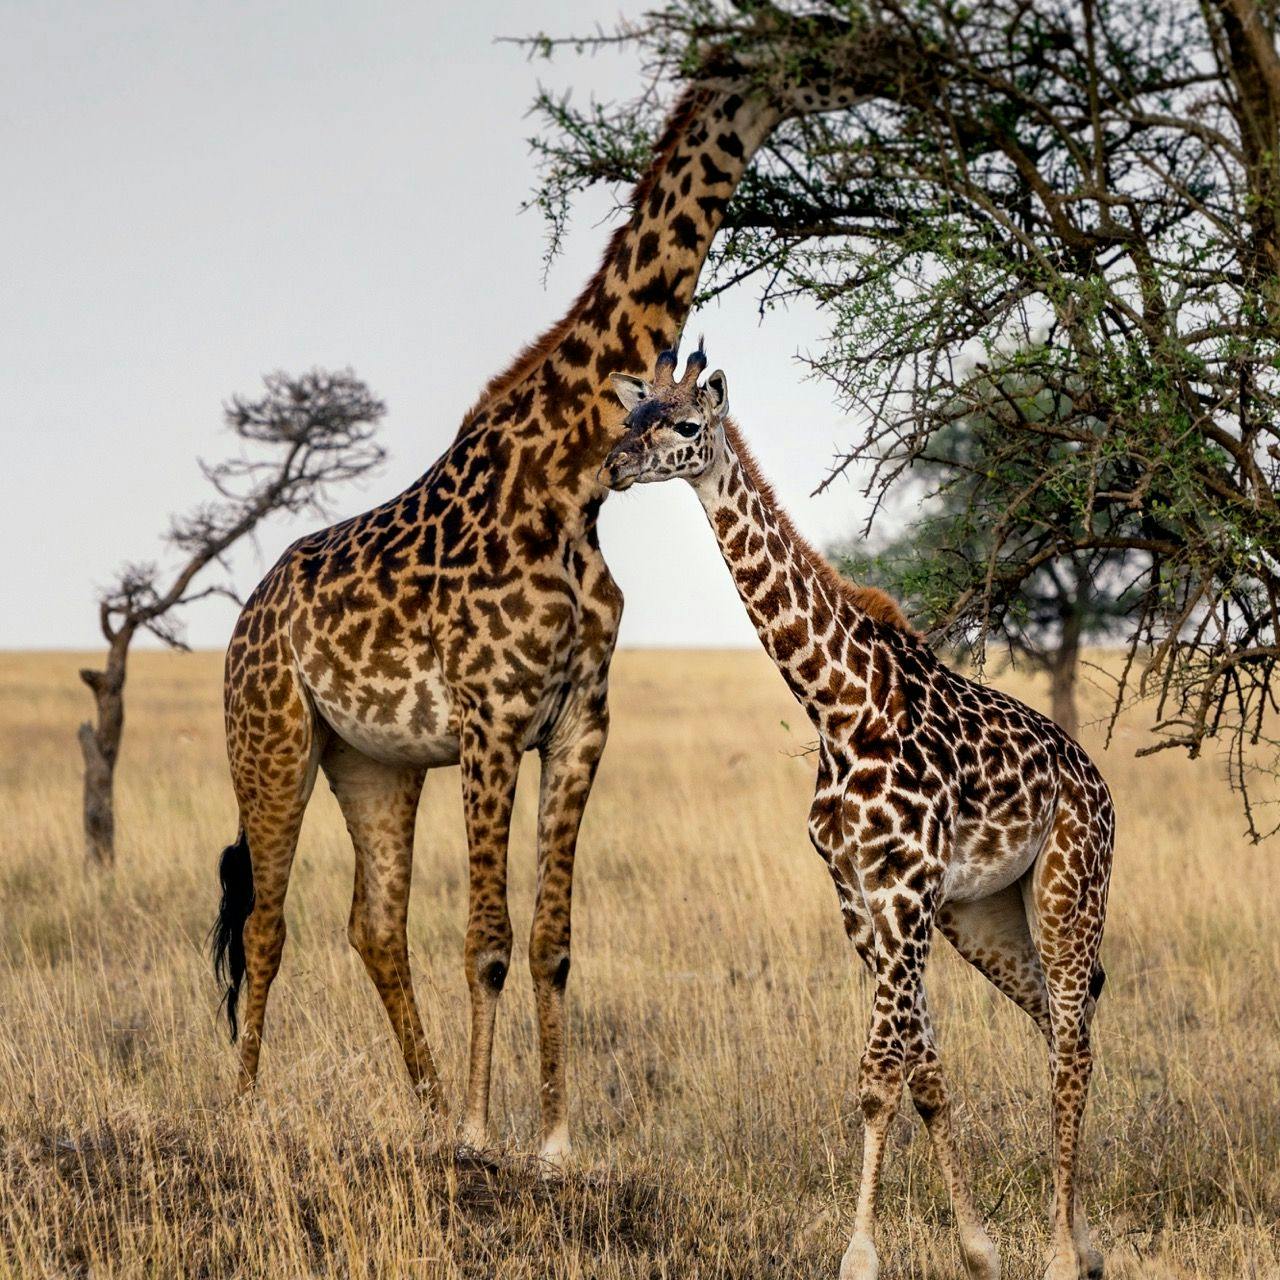 Giraffes in Serengeti national park in Tanzania